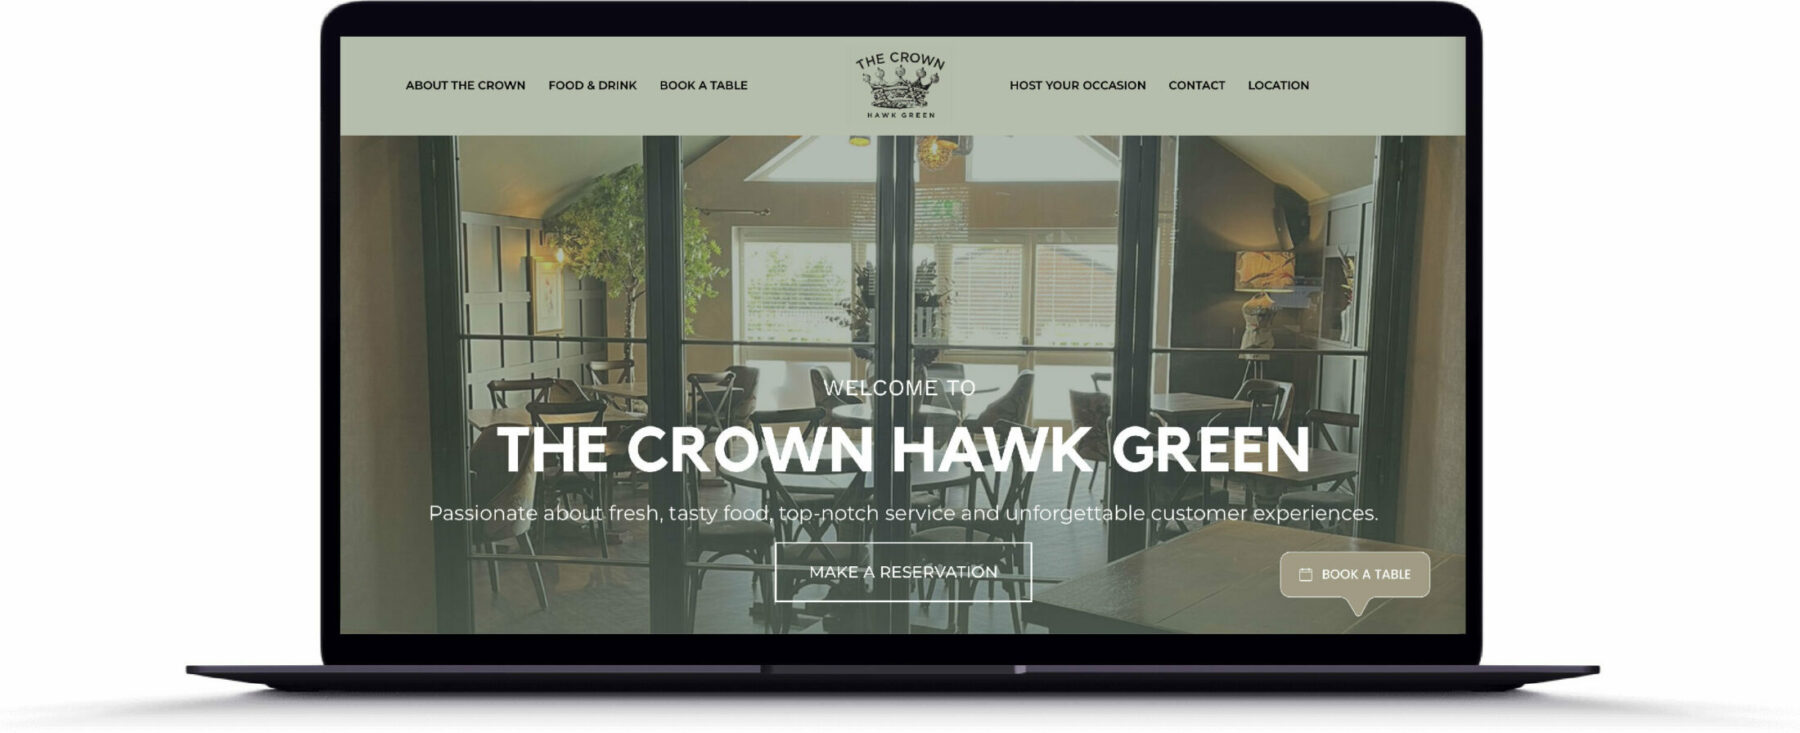 Crown Hawk Green, Stockport, UK